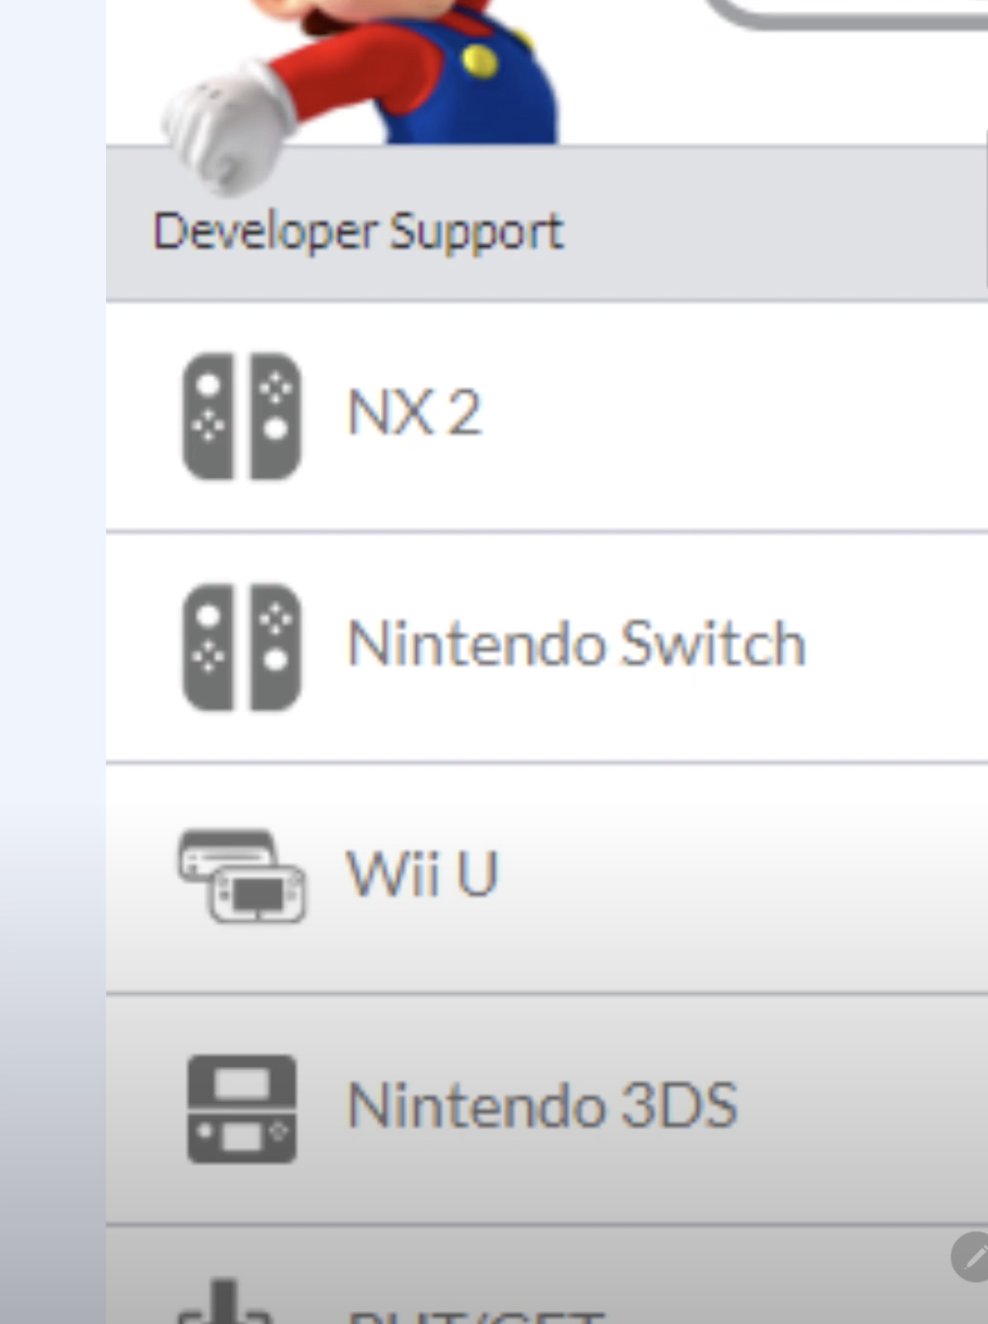 Nintendo Developer Portal